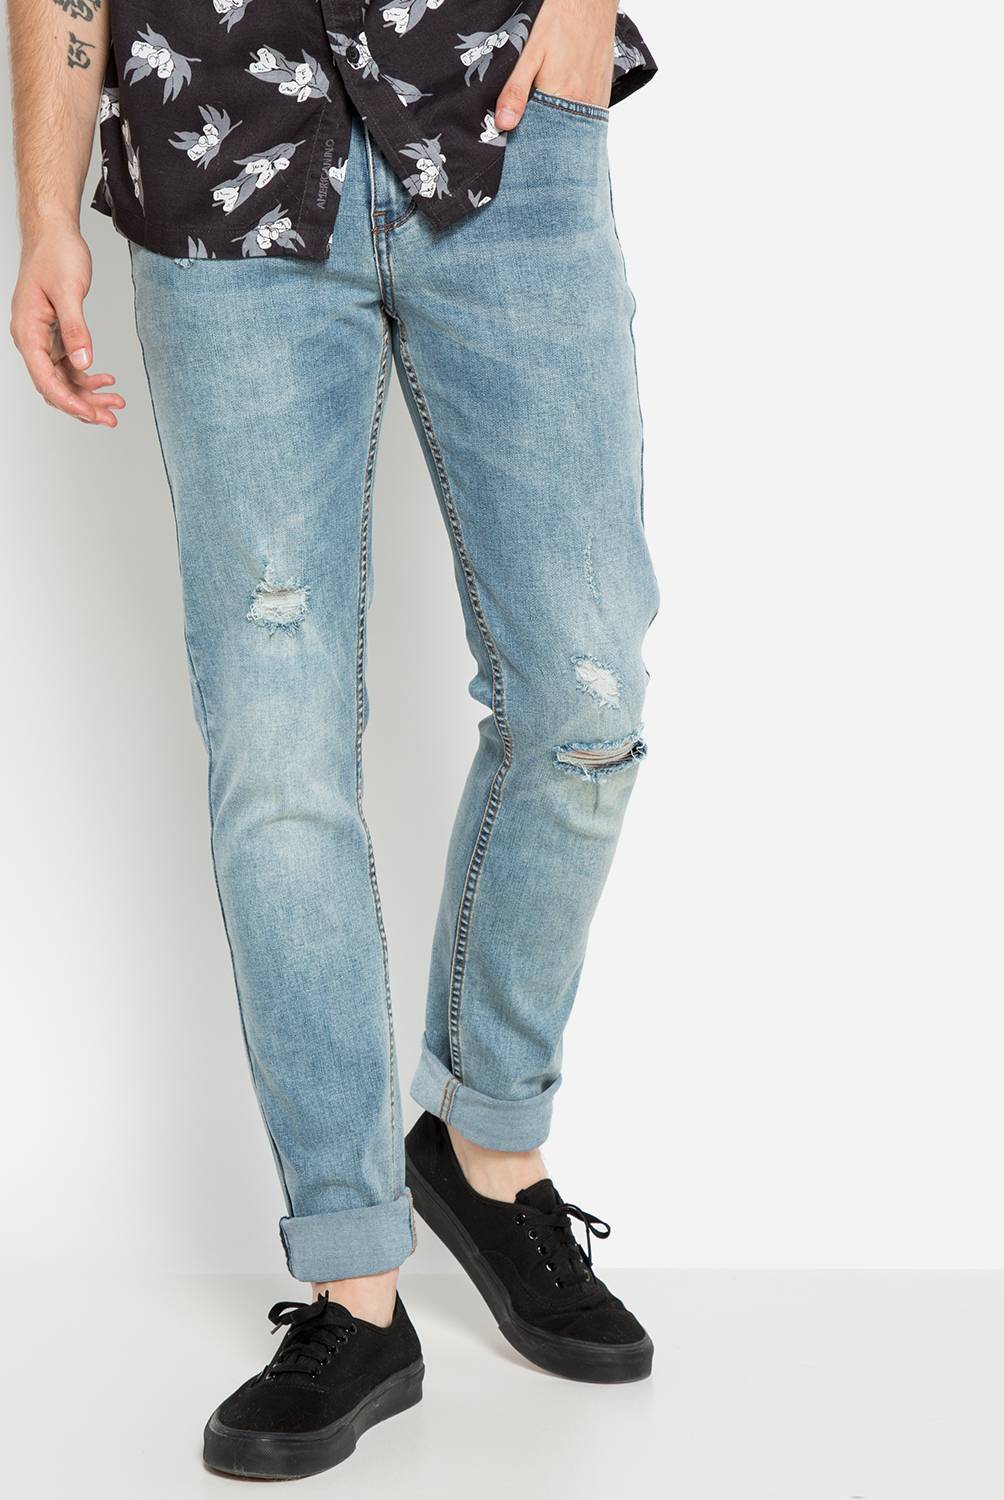 Americanino - Skinny Jeans Destroyed Ultra Stretch